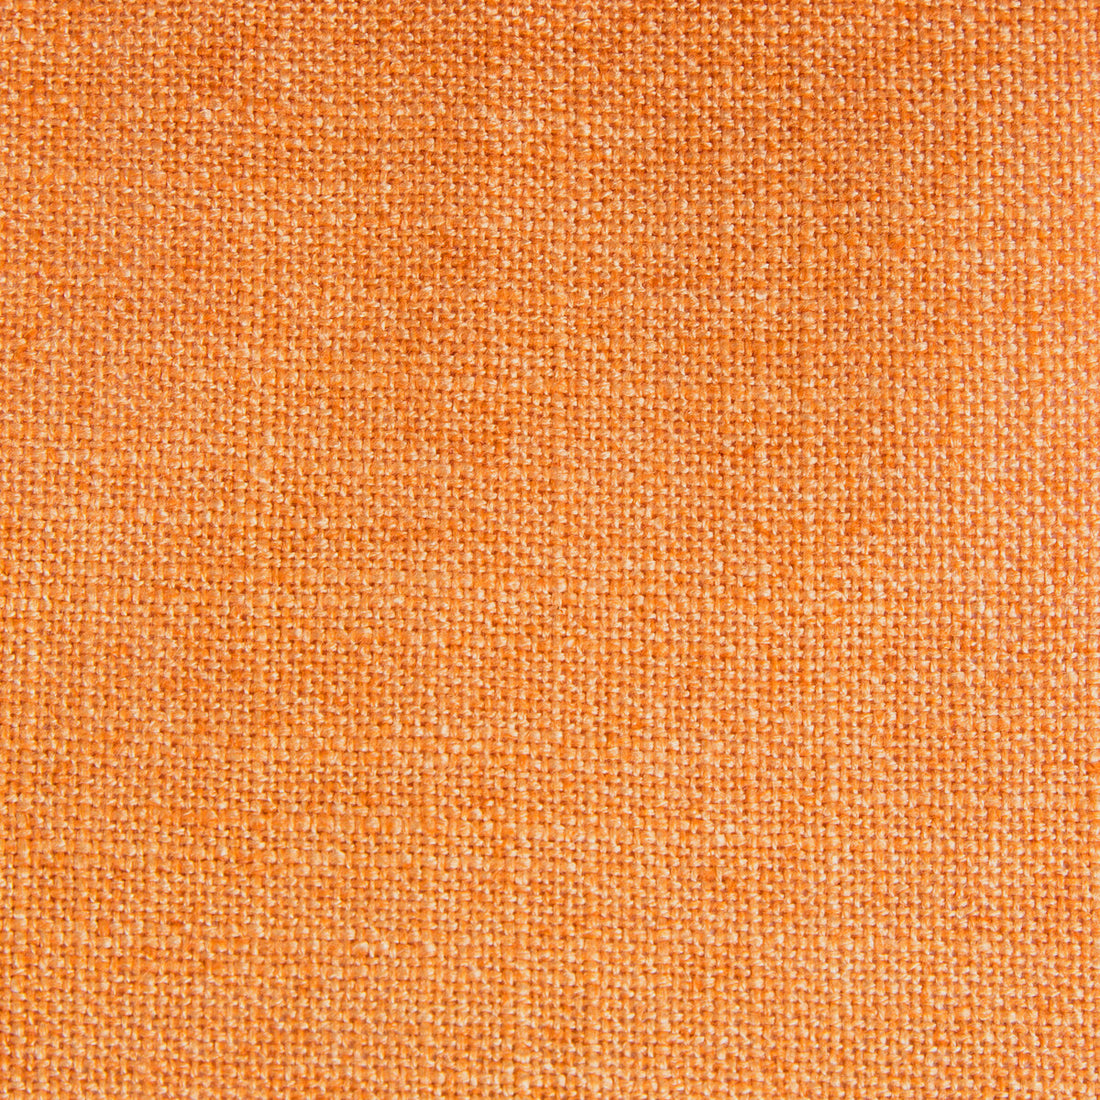 Peru fabric in naranja color - pattern GDT5548.024.0 - by Gaston y Daniela in the Gaston Nuevo Mundo collection